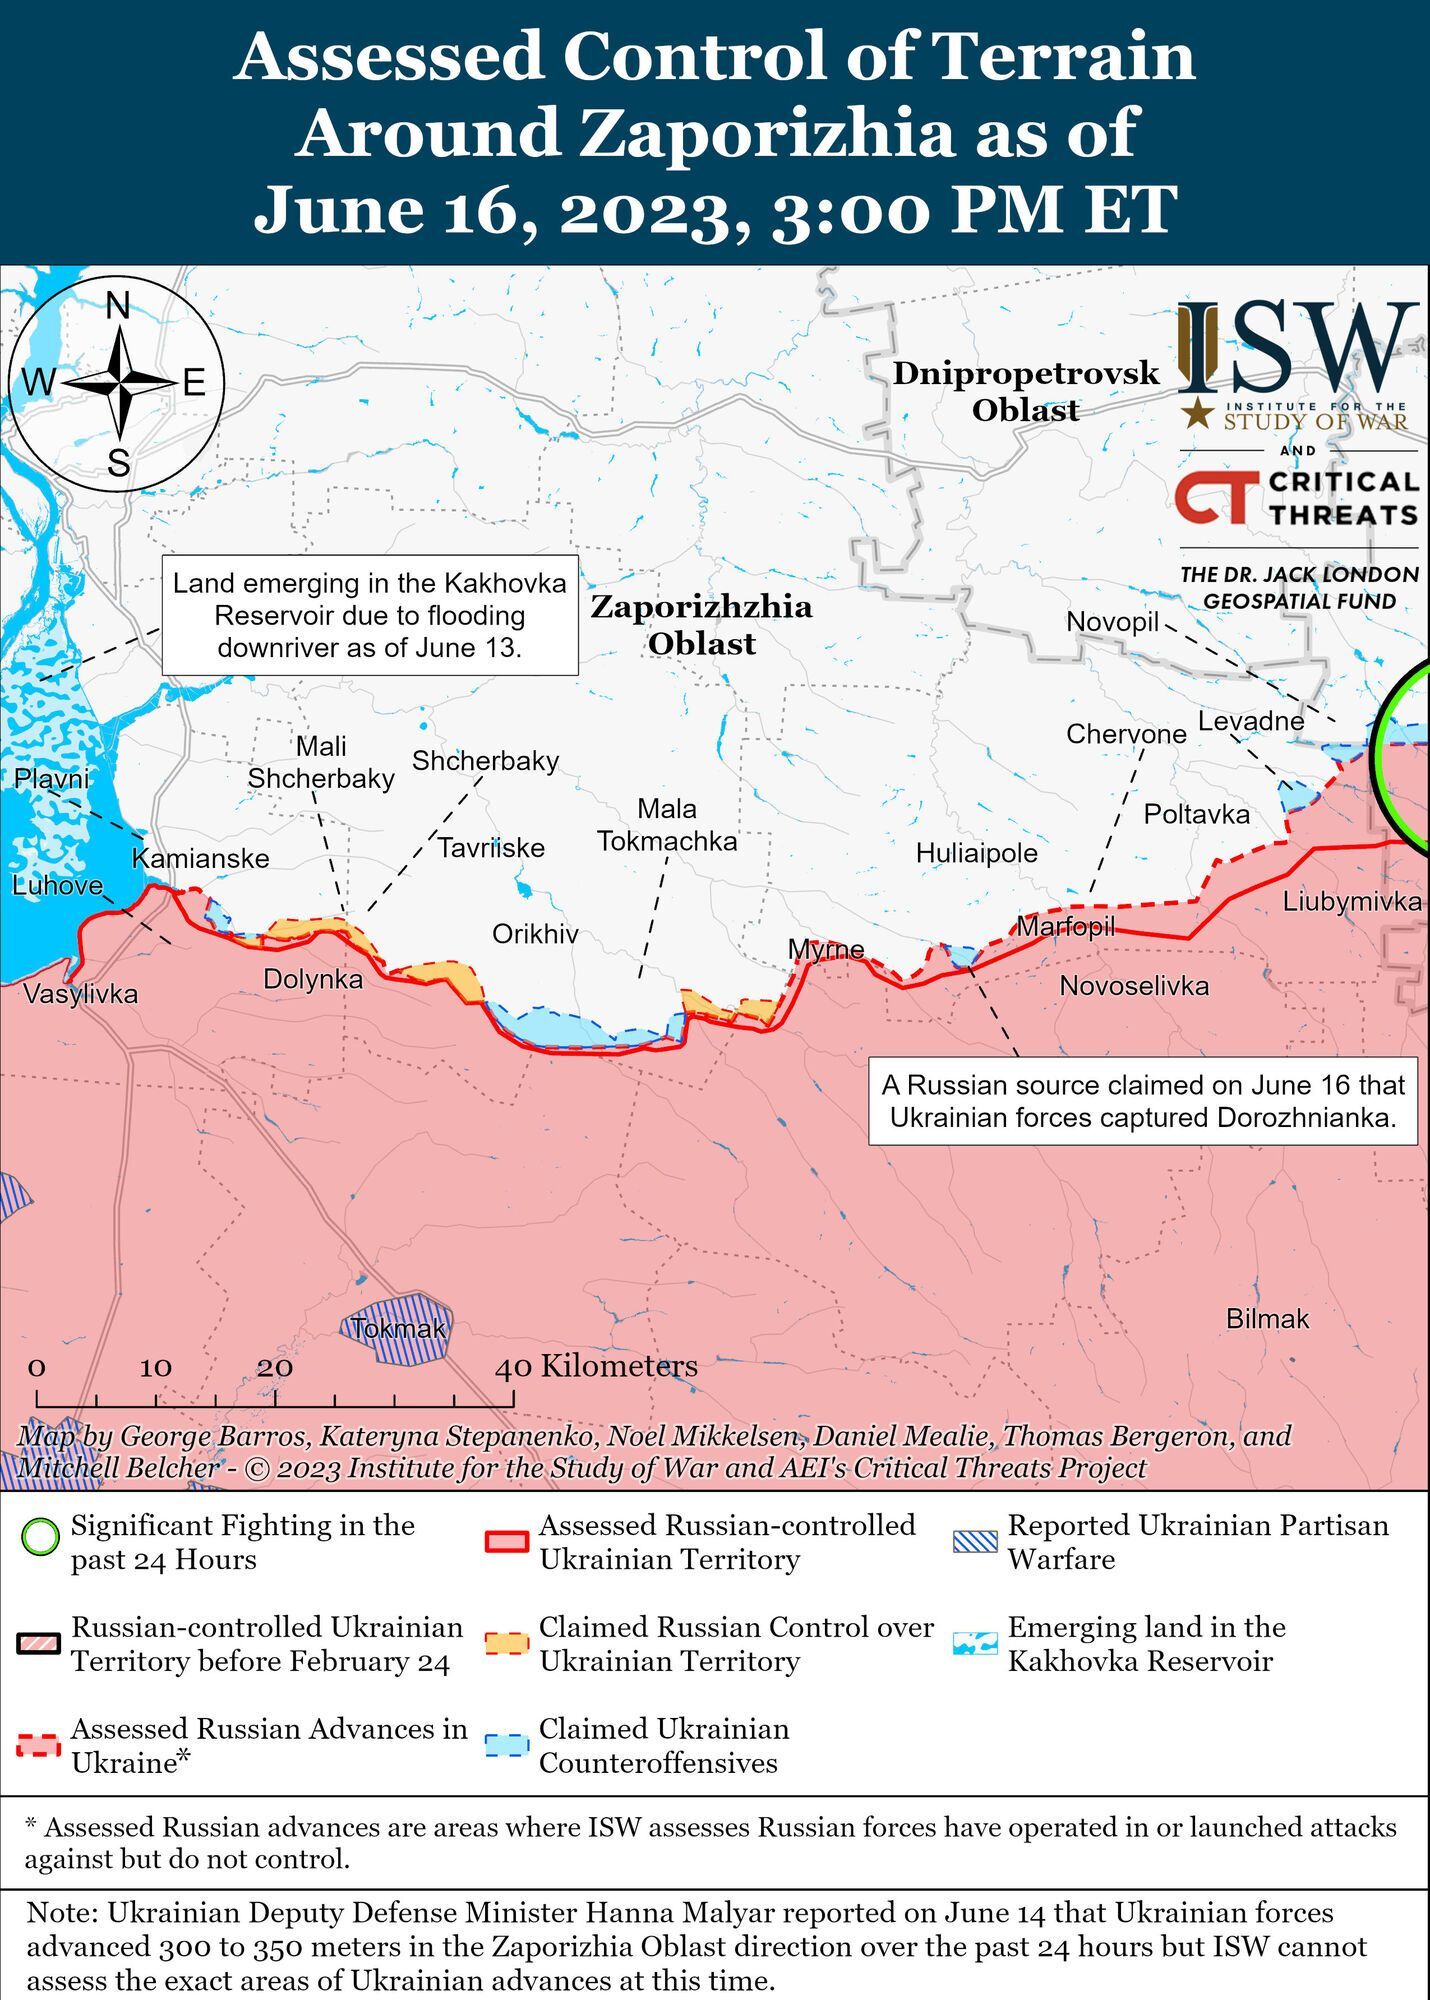 Линия фронта на юге Украины